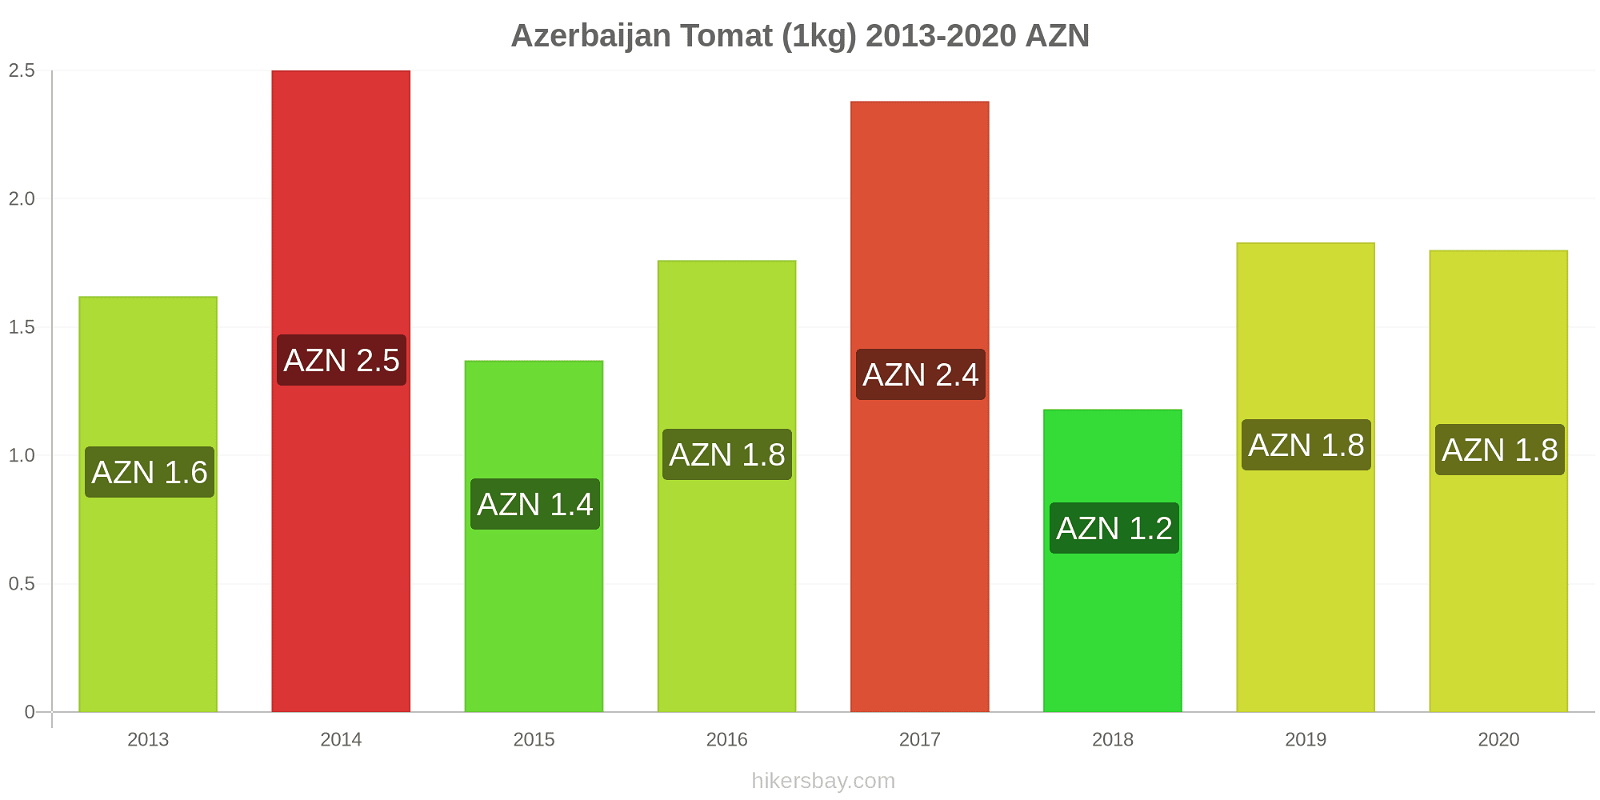 Azerbaijan perubahan harga Tomat (1kg) hikersbay.com